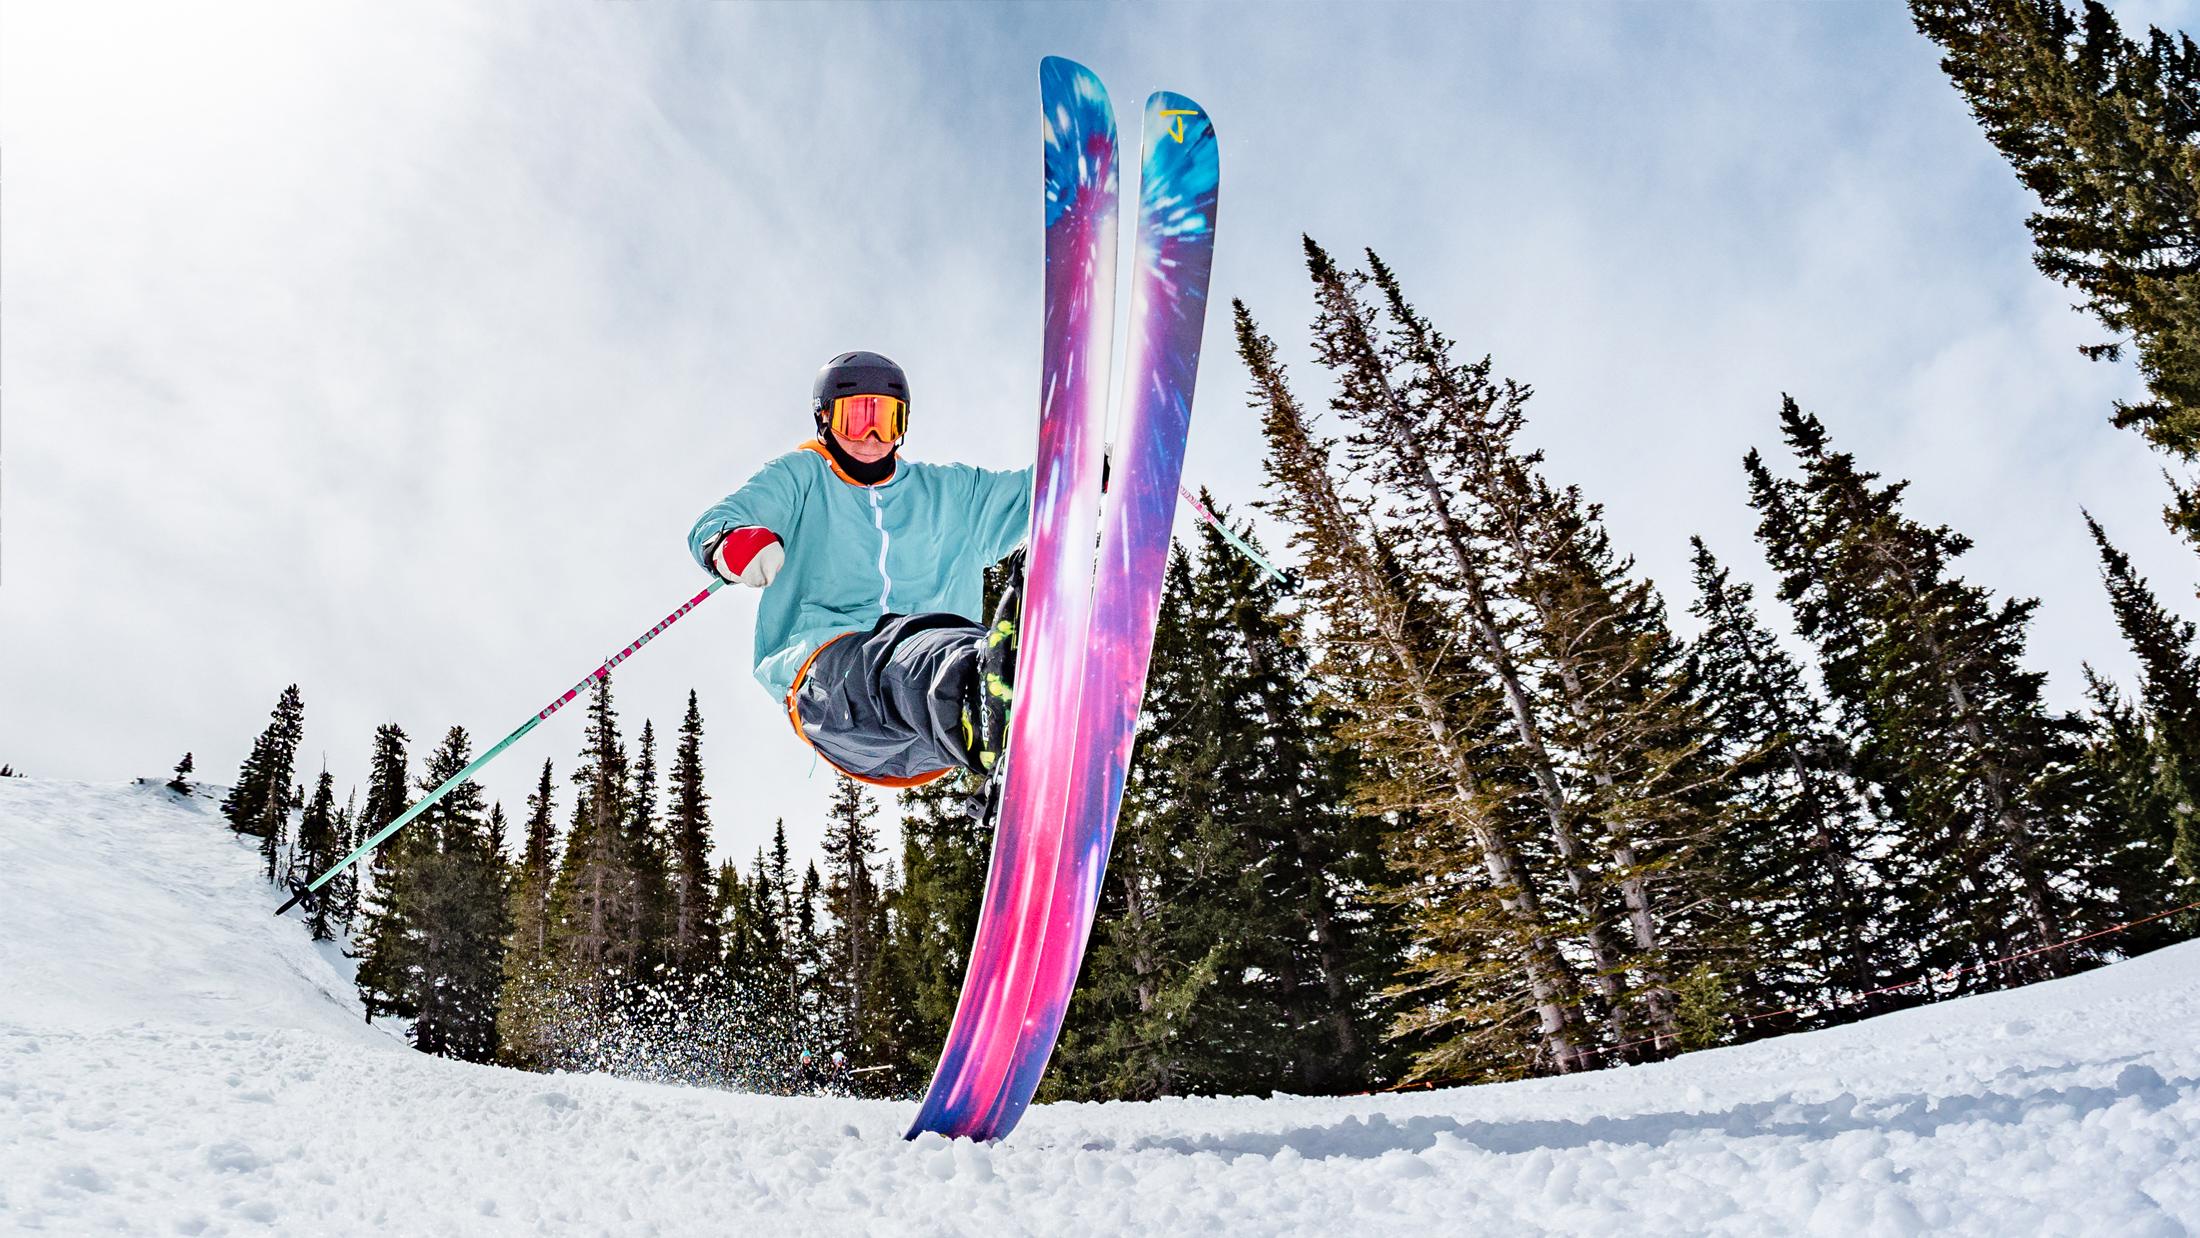 The Allplay "COSMOS" Tami Alba x J Collab Limited Edition Ski Shredding Image